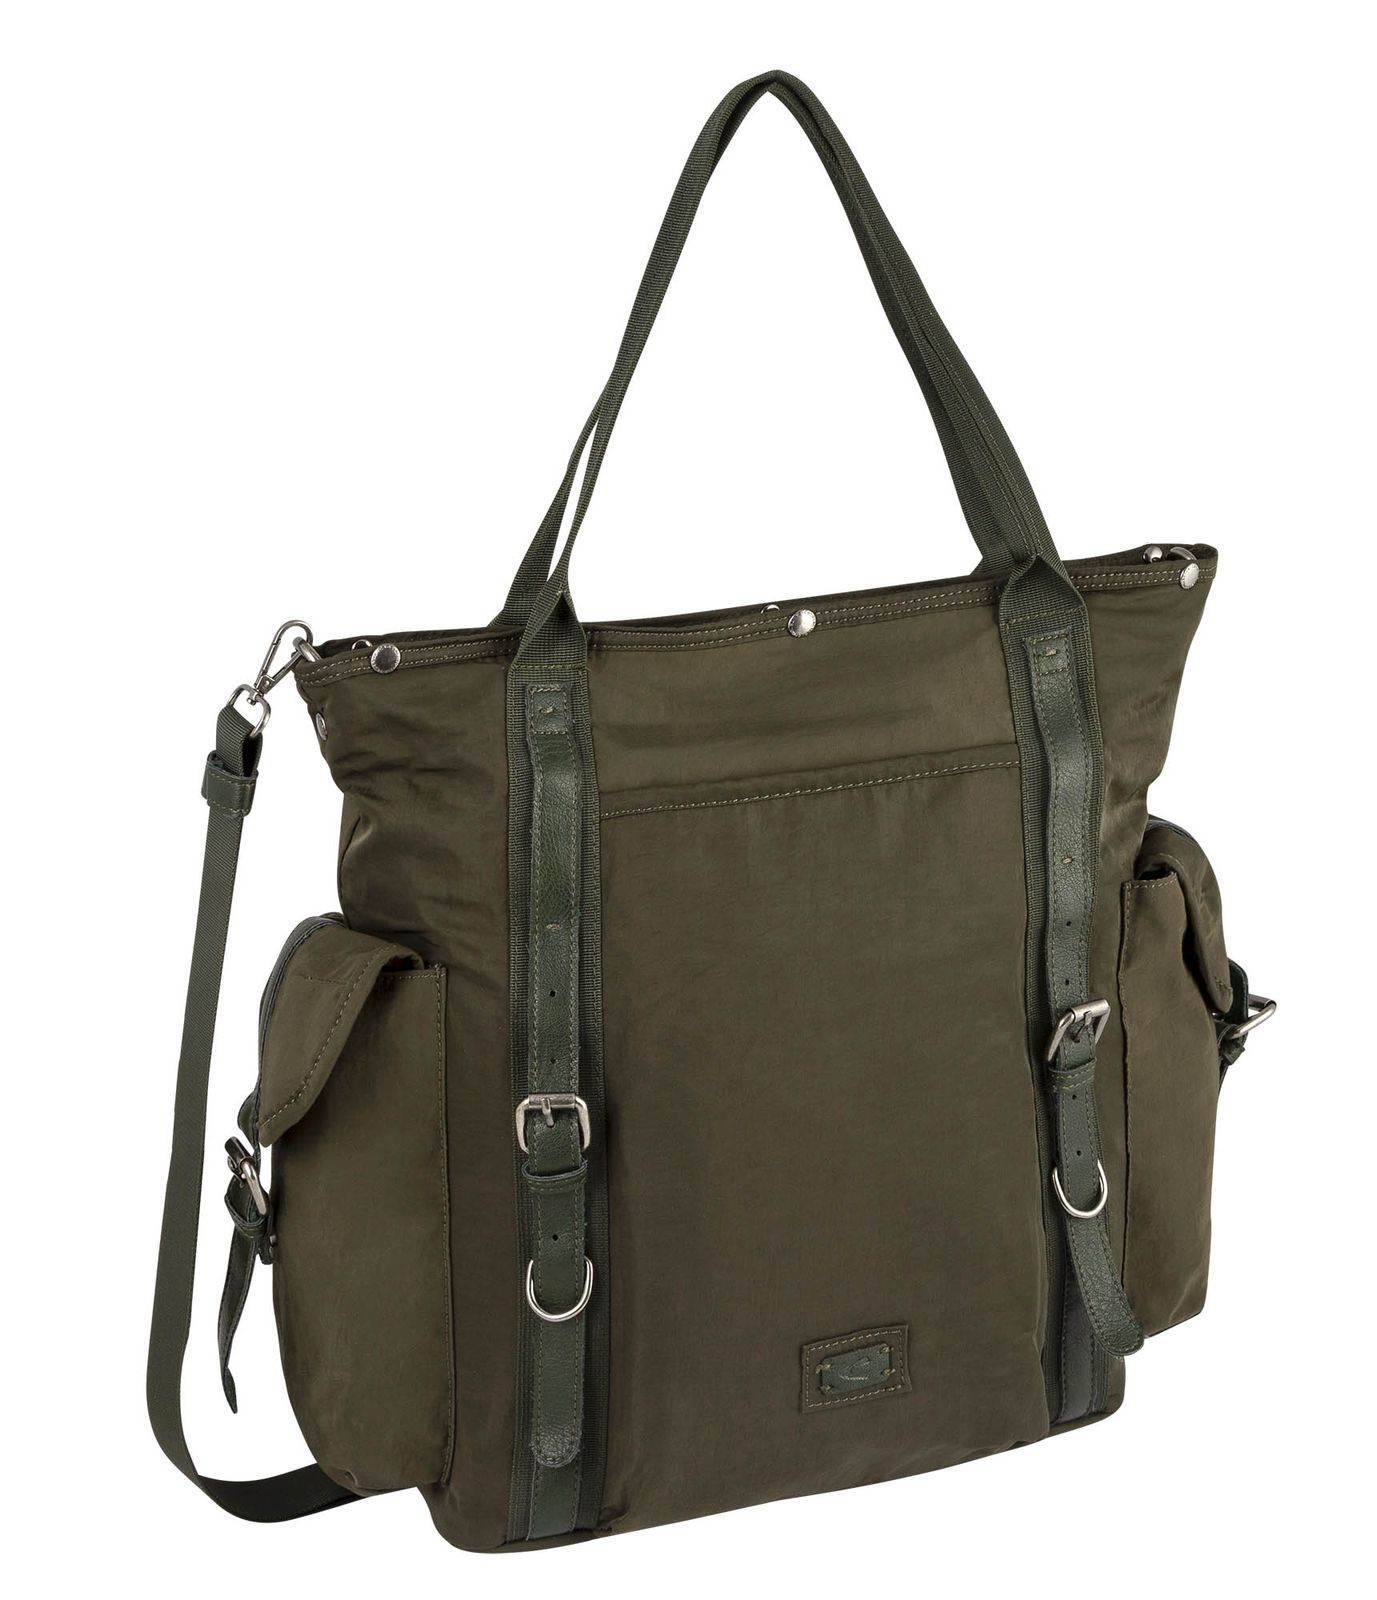 camel active Aruba Shopper Khaki | Buy bags, purses & accessories ...